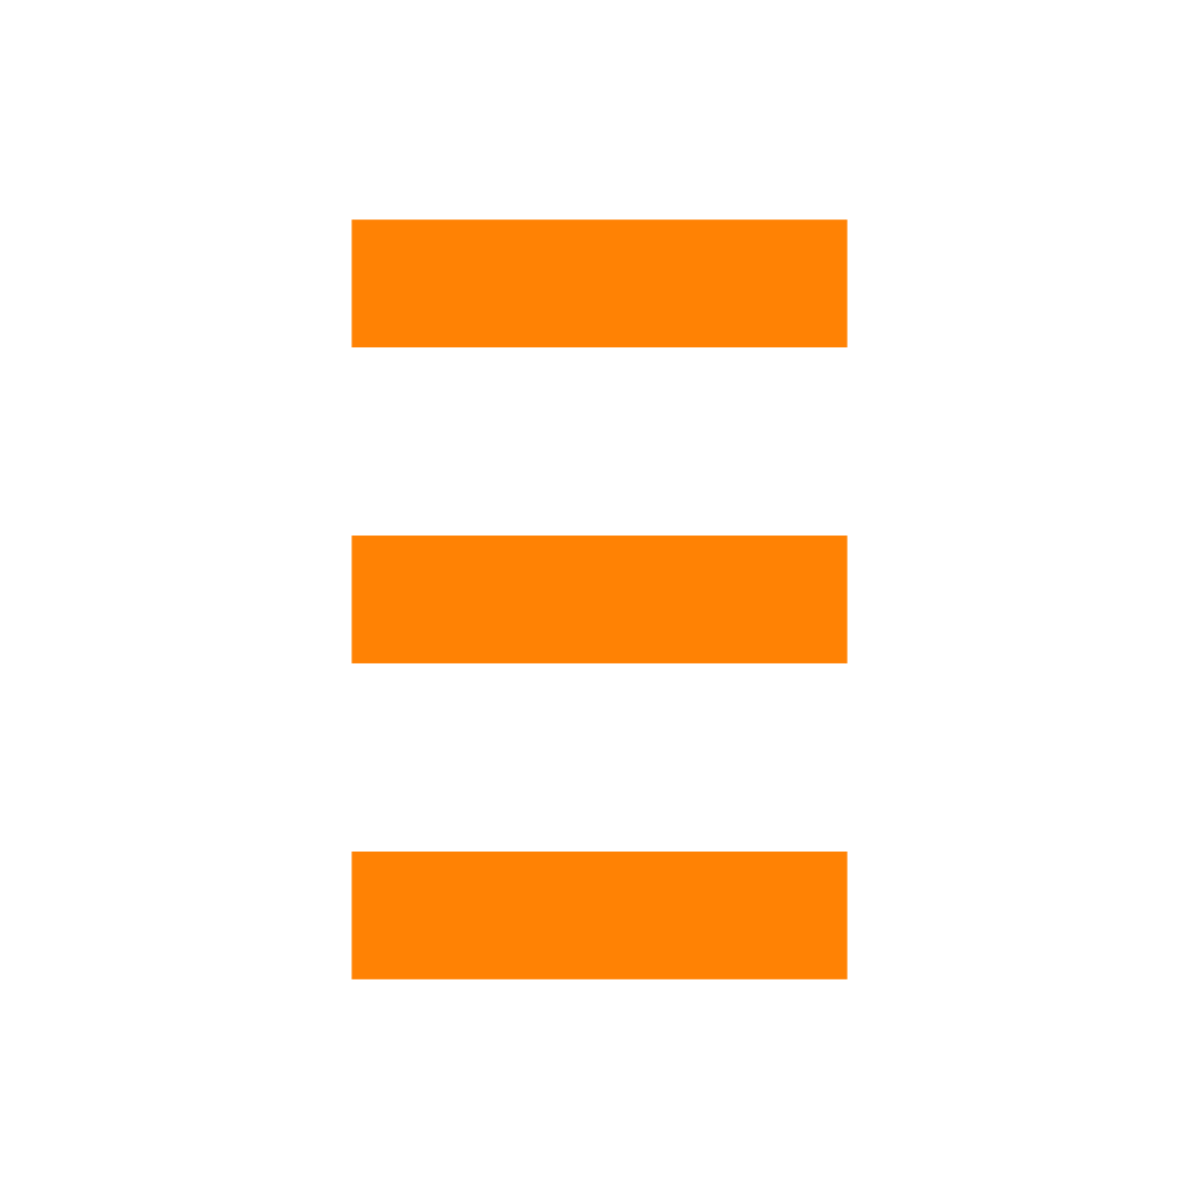 EPIC Creative logo